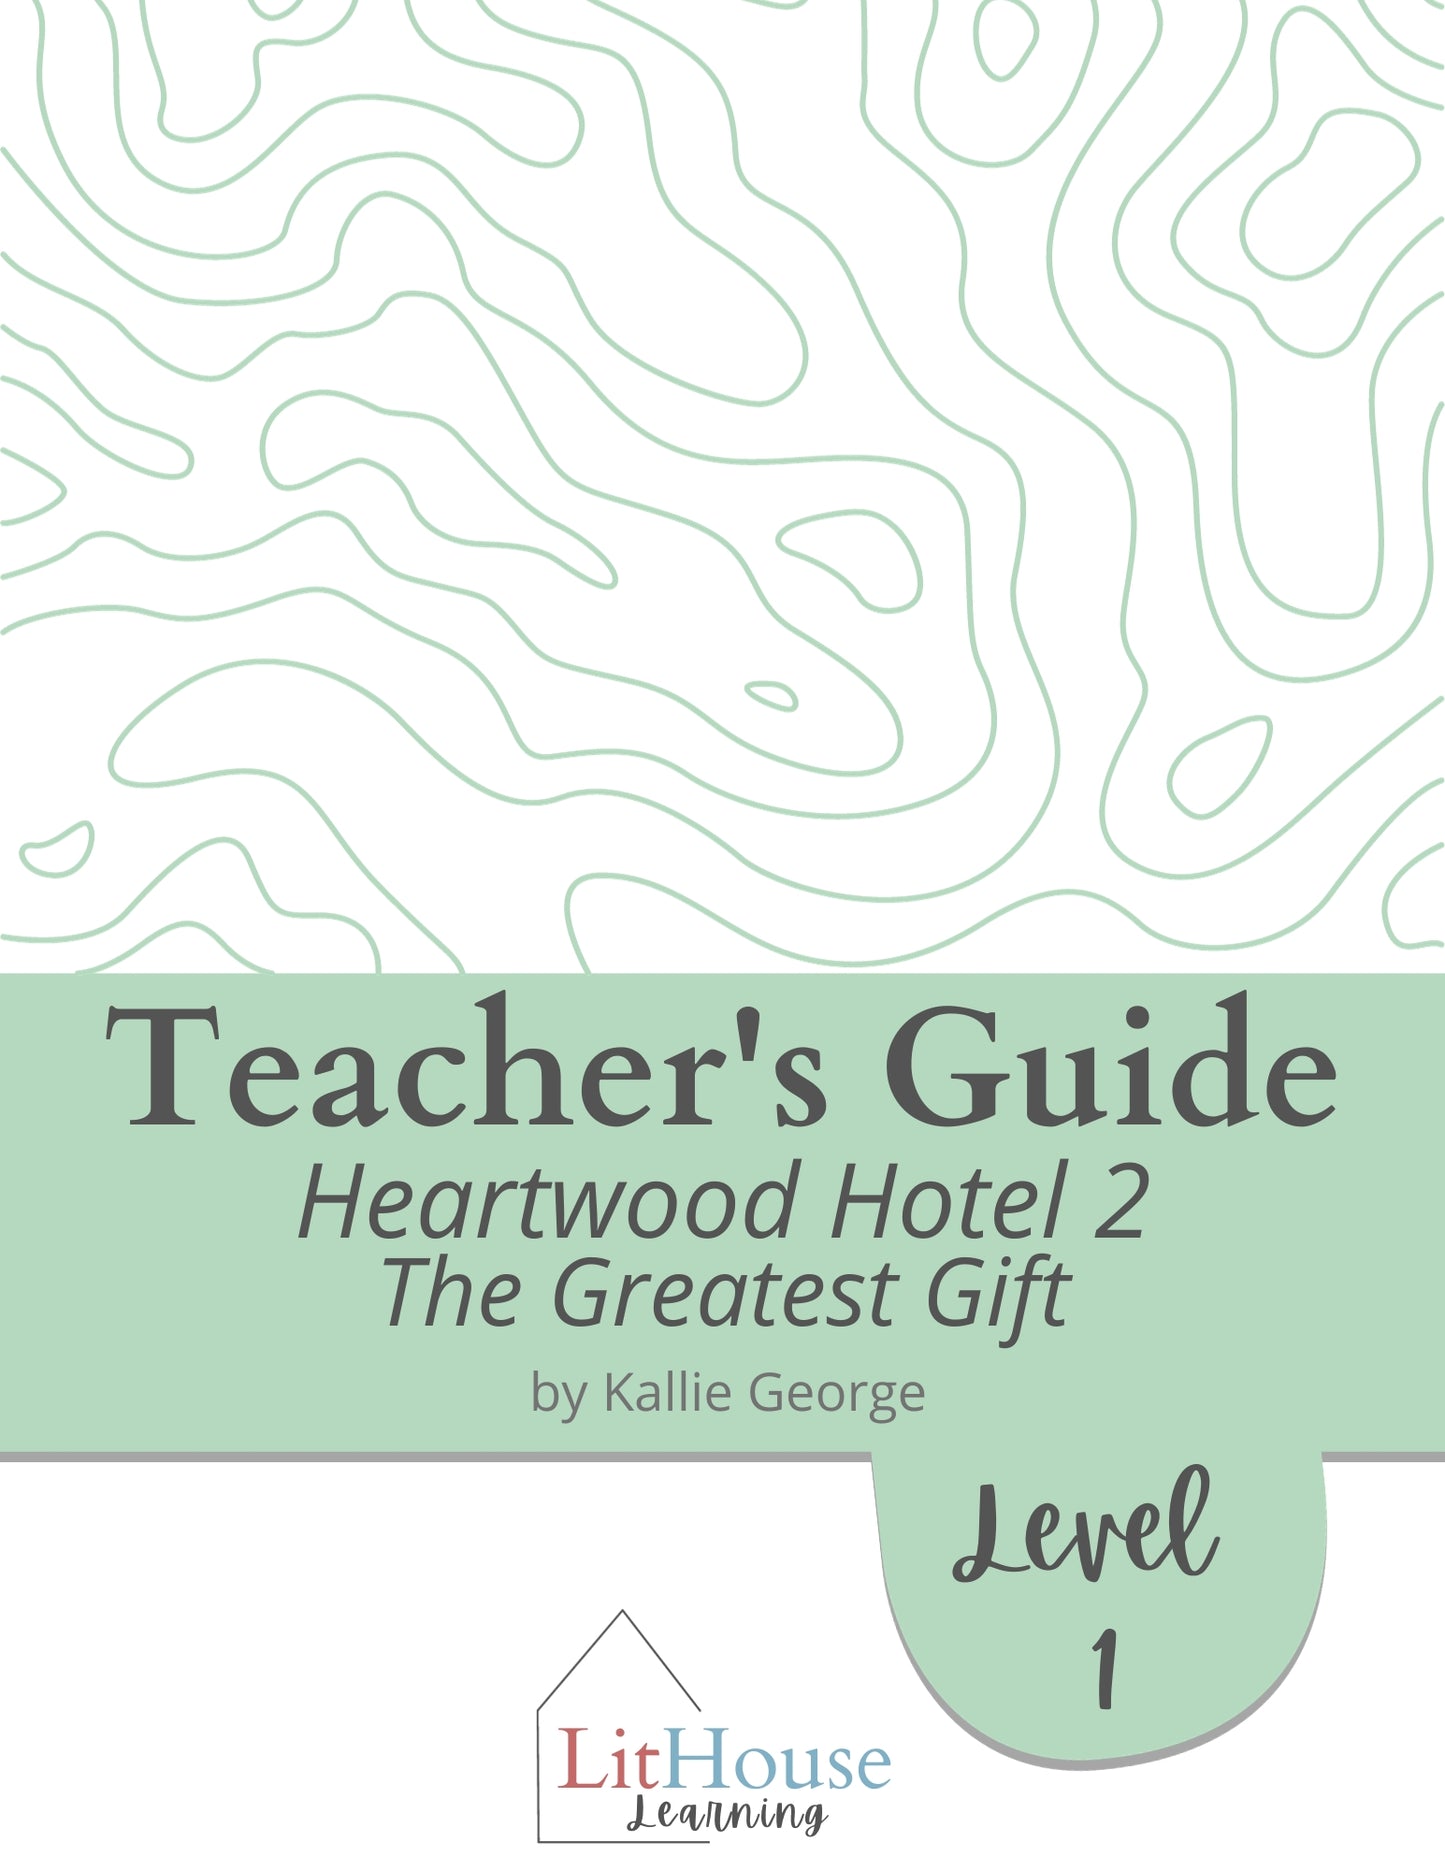 The Greatest Gift (Heartwood Hotel, 2) Novel Study